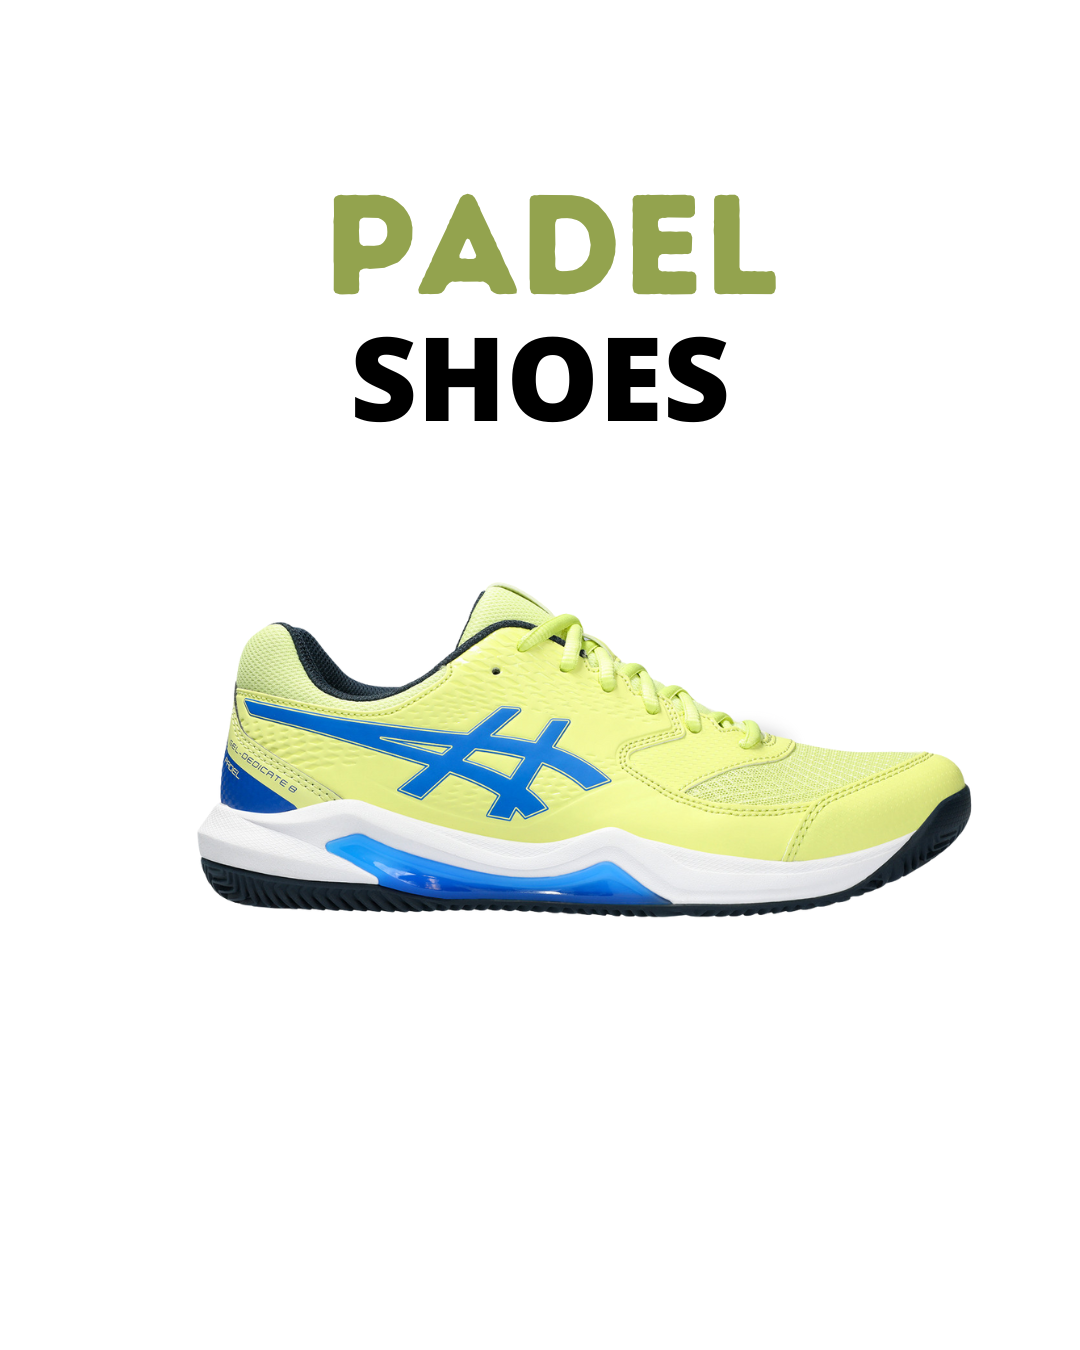 Padel Shoes